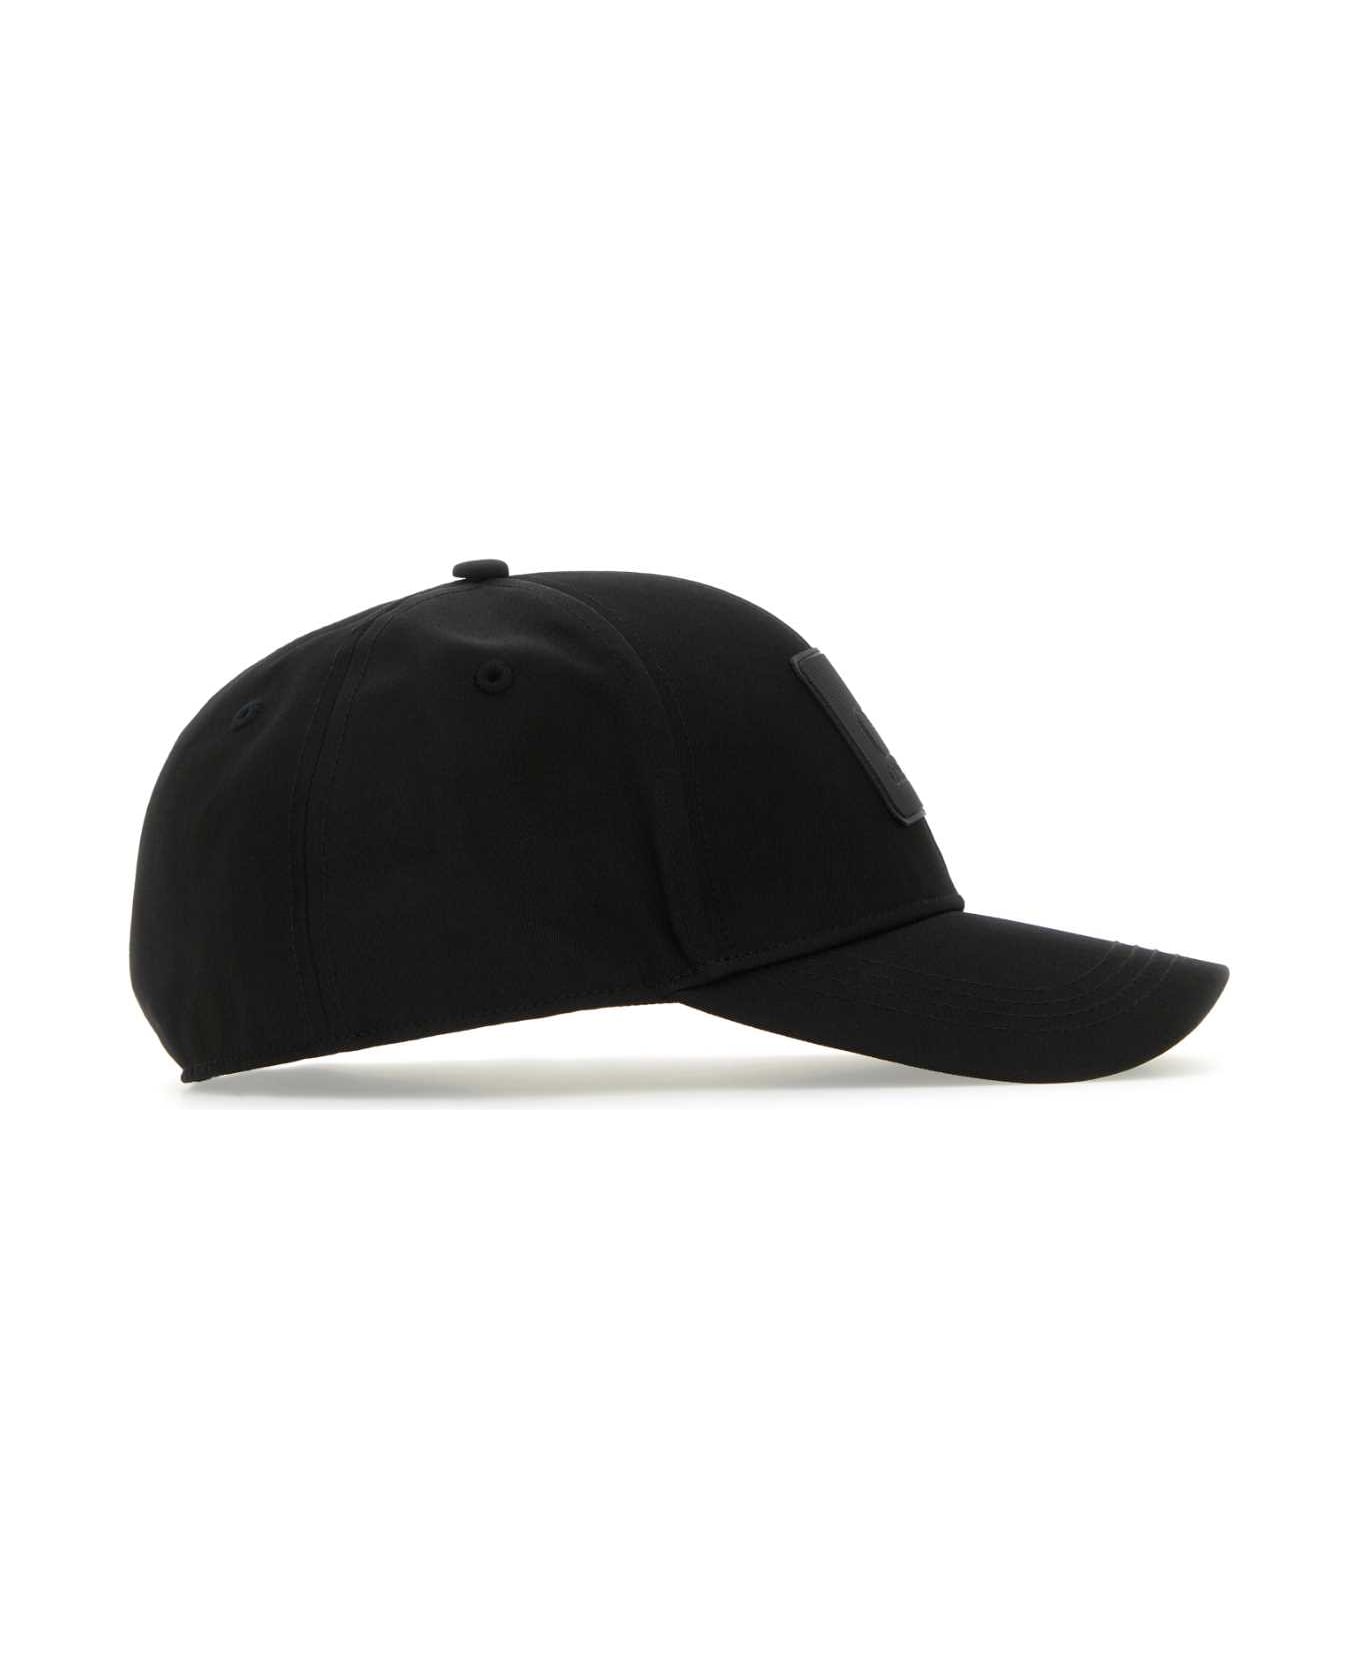 C.P. Company Black Polyester Baseball Cap - Black